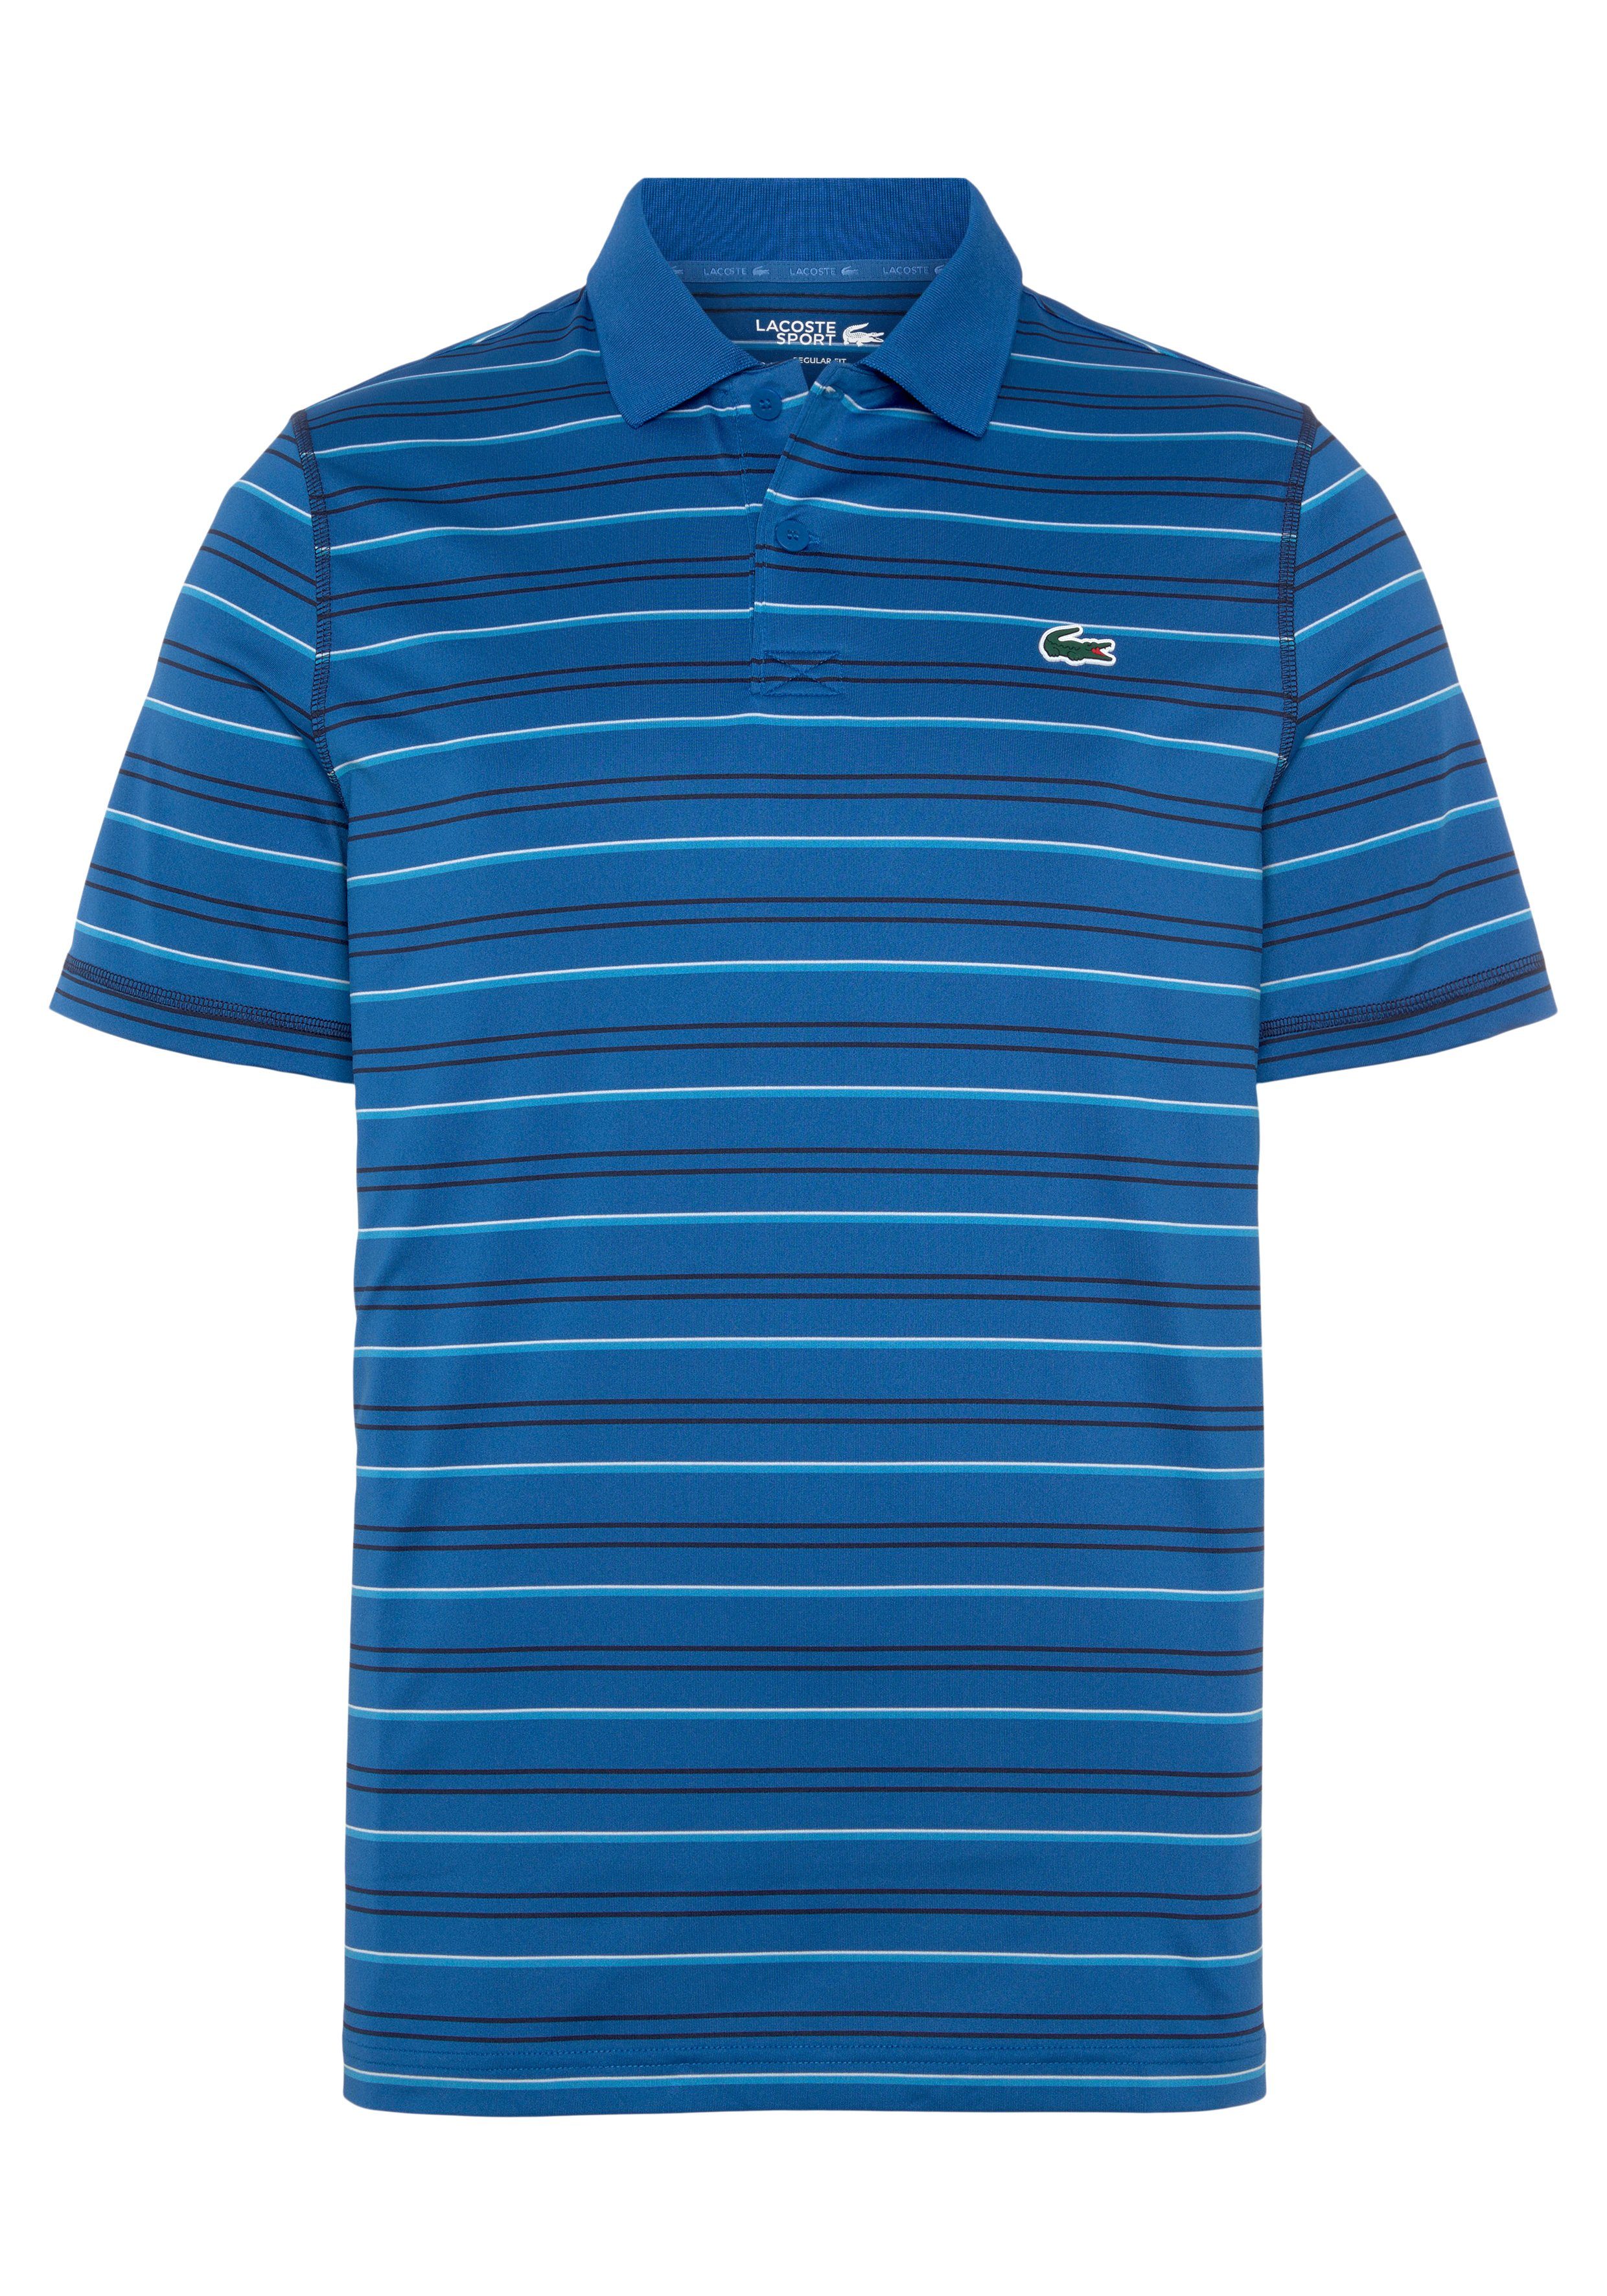 Lacoste Poloshirt recyceltes Polyester, atmungsaktives Golf Polo Shirt kingdom/navy